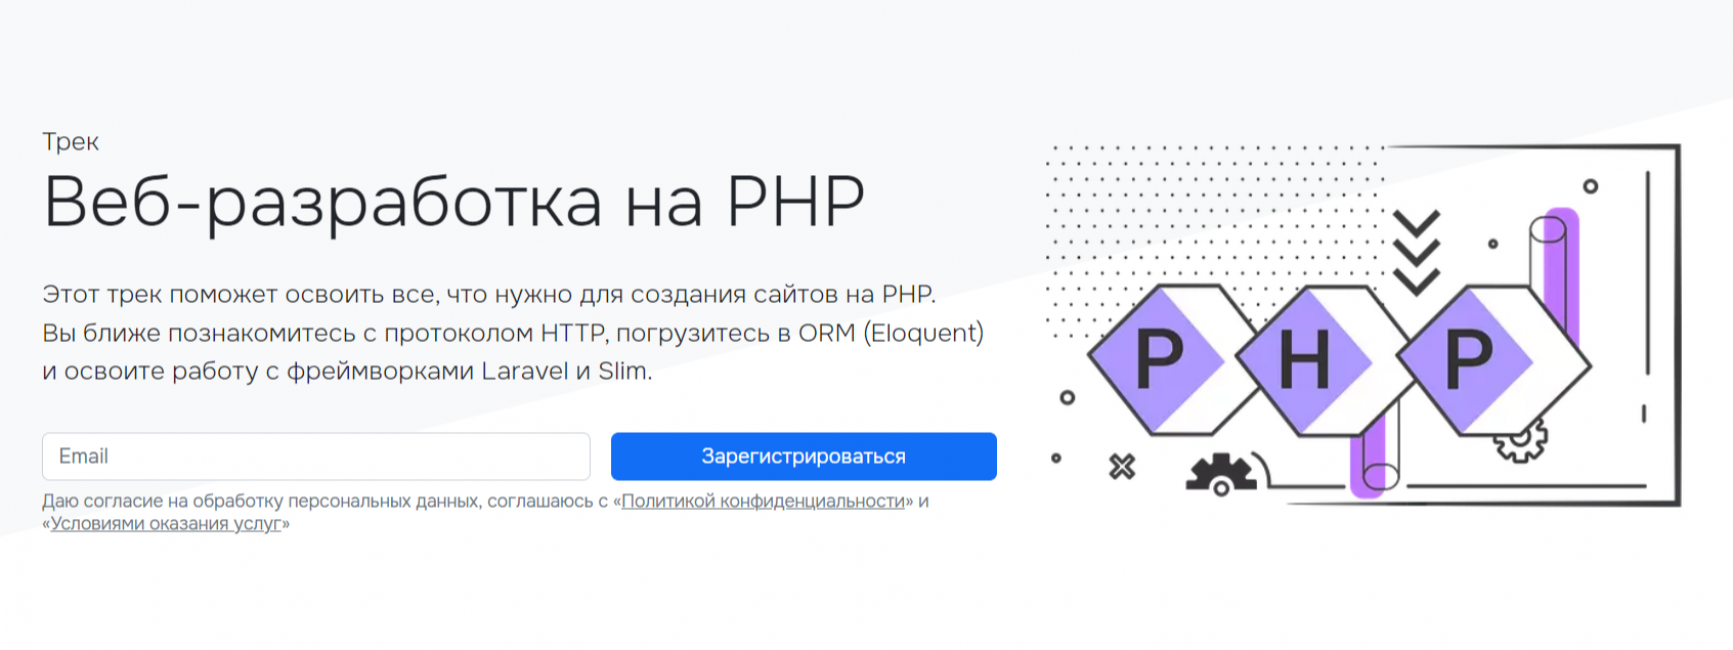 Веб-разработка на PHP